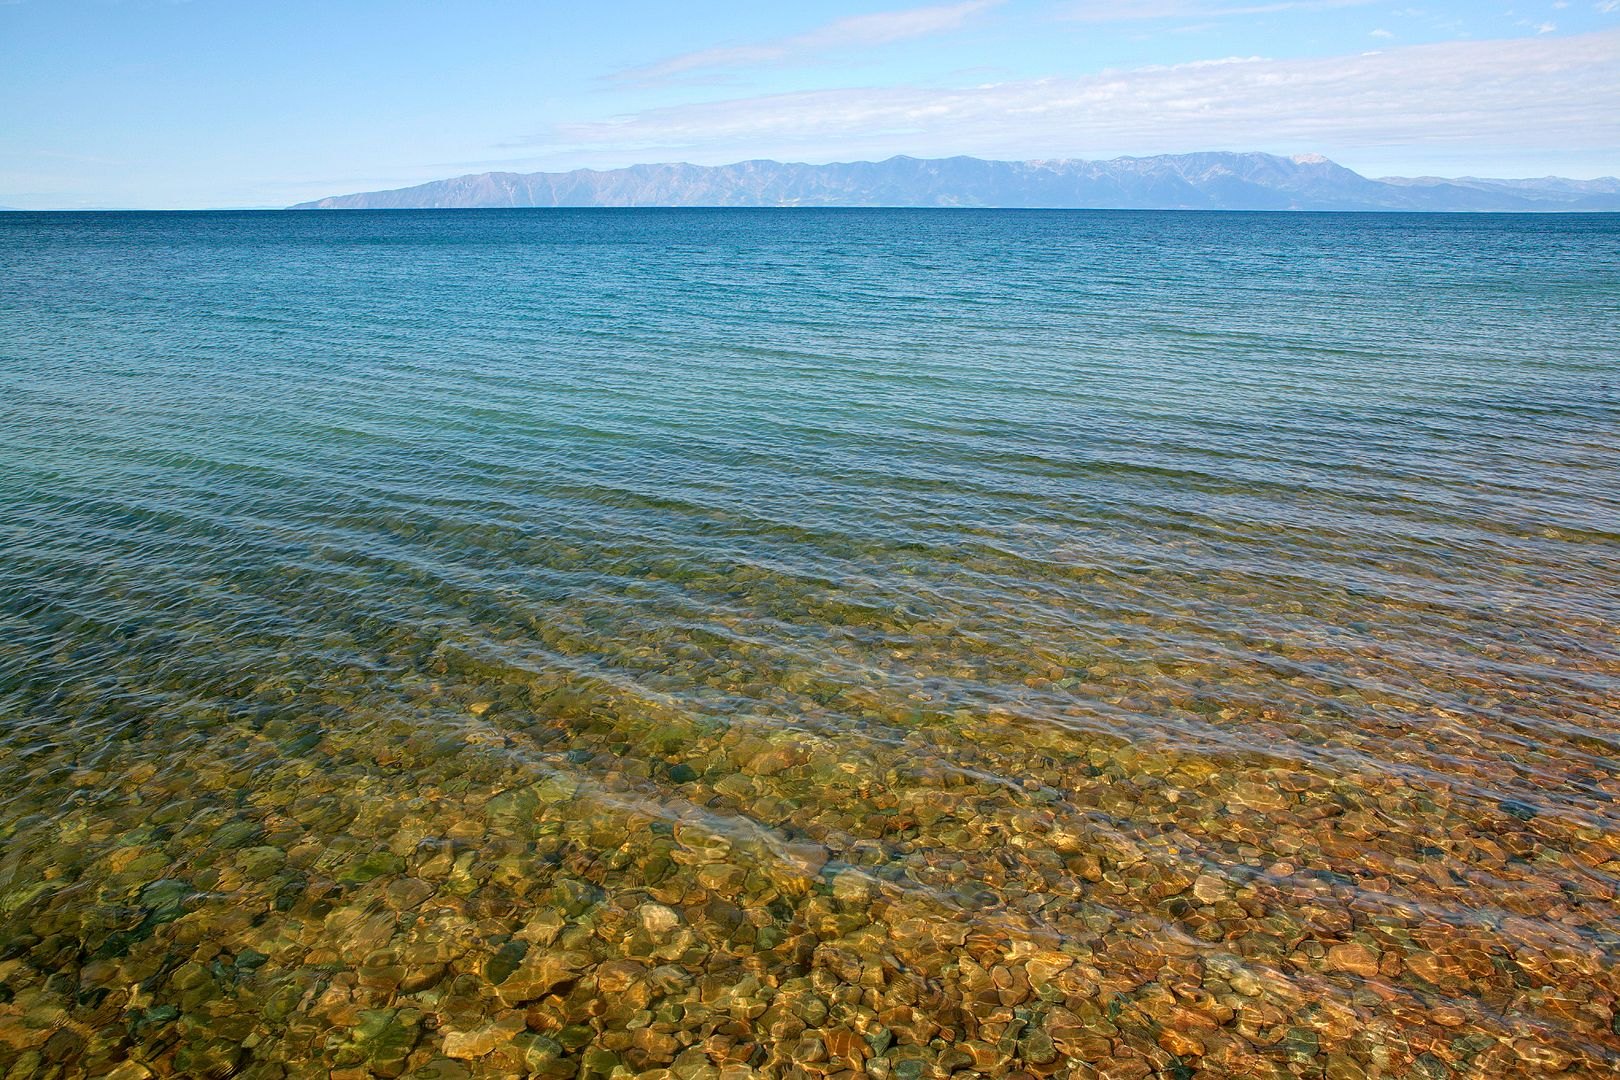 Воды байкала чисты и прозрачны. Чистое озеро Байкал. Озеро Байкал вода. Озеро Байкал прозрачность воды. Дно озера Байкал.